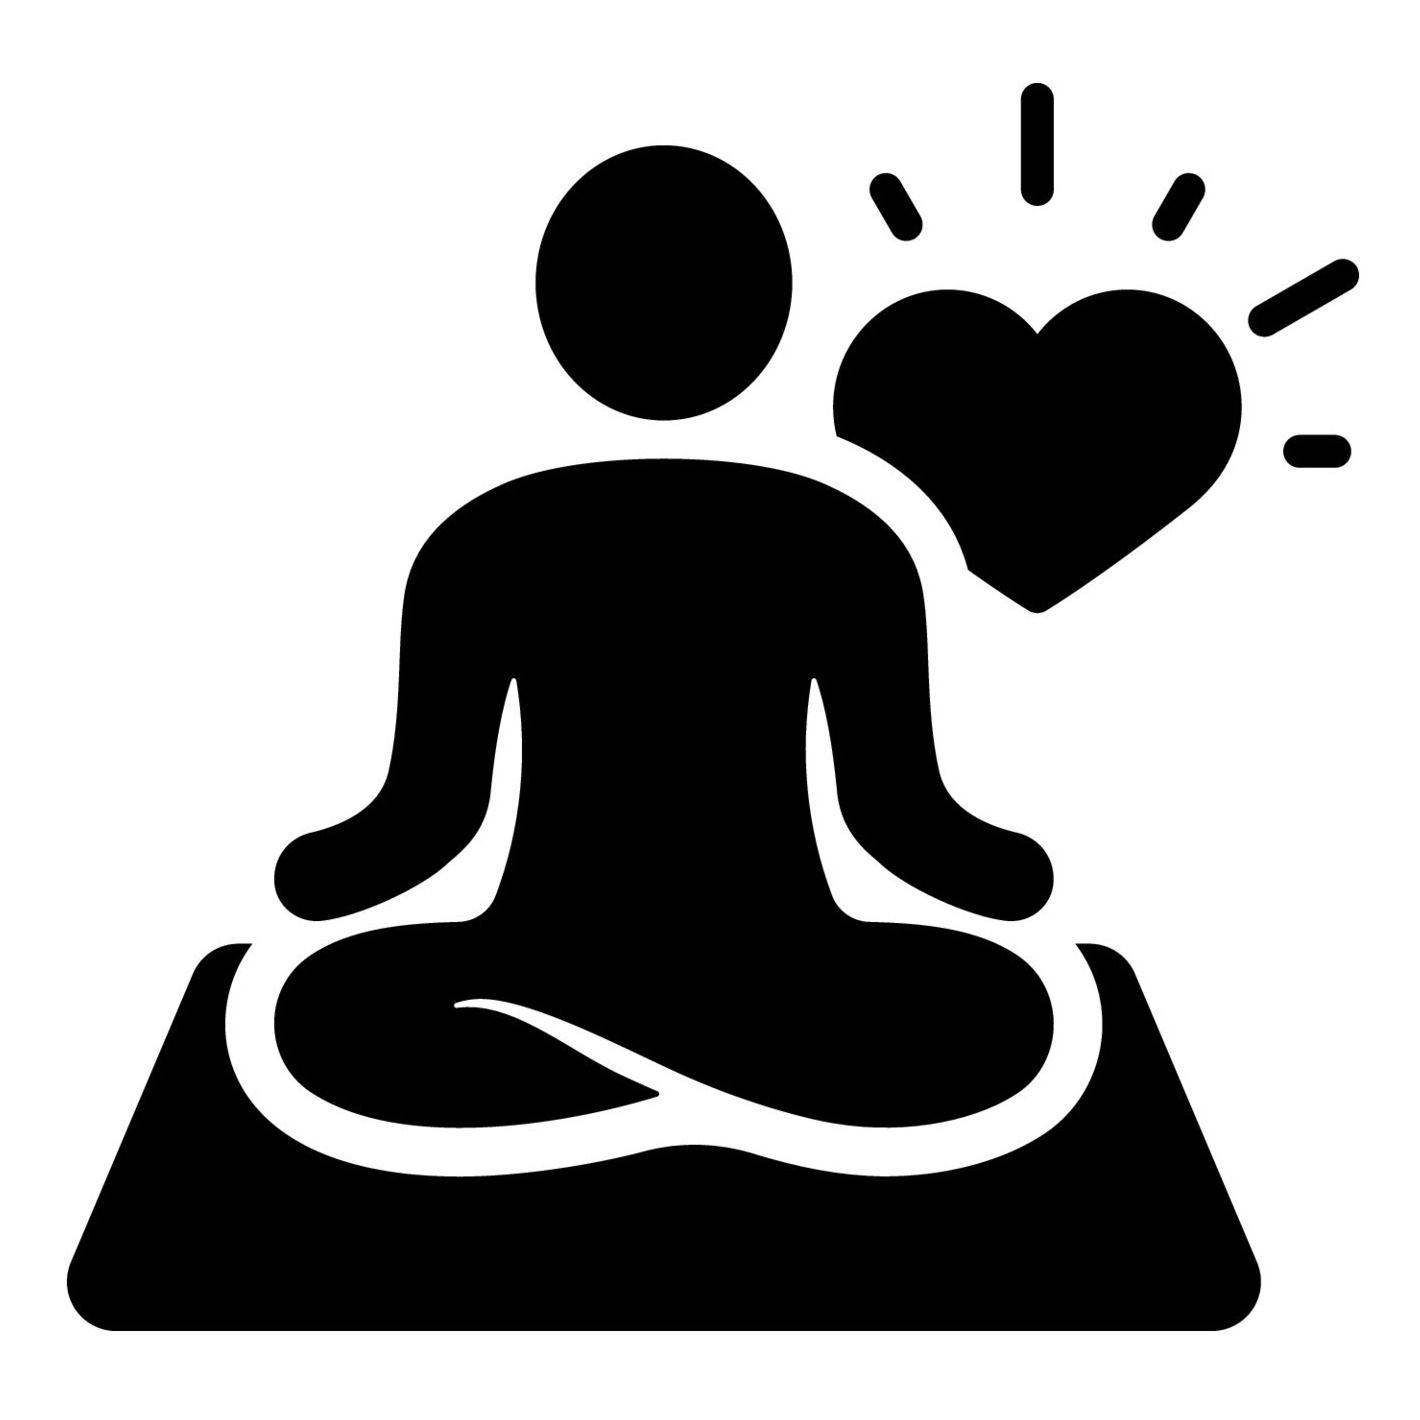 11897412-icone-de-silhouette-de-mantra-yoga-mediter-se-detendre-pictogramme-icone-noire-chakra-spirituel-zen-calme-aura-galaxie-serenite-et-sante-corps-logo-de-meditation-illustrationle-isolee-vectoriel.jpg